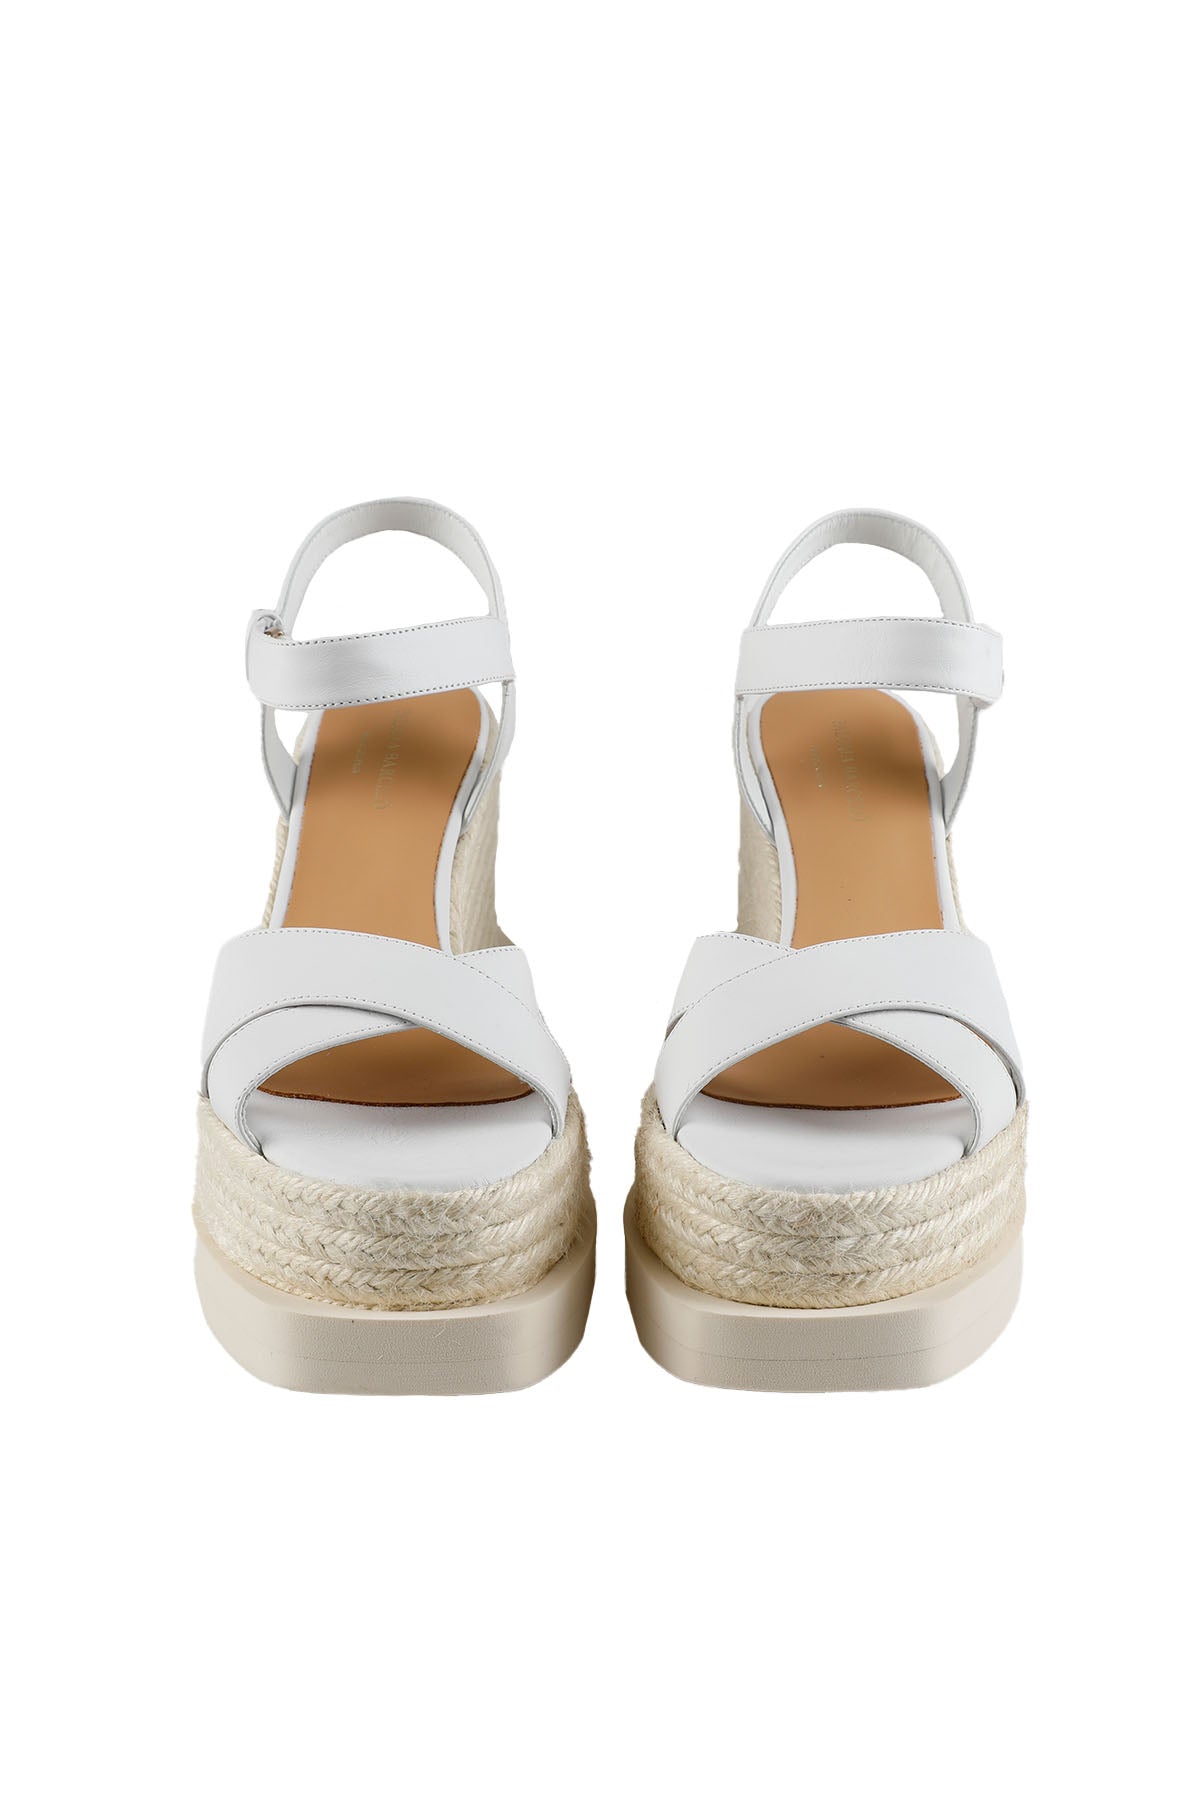 Paloma Barcelo Hasır Dolgu Topuk Deri Sandalet-Libas Trendy Fashion Store